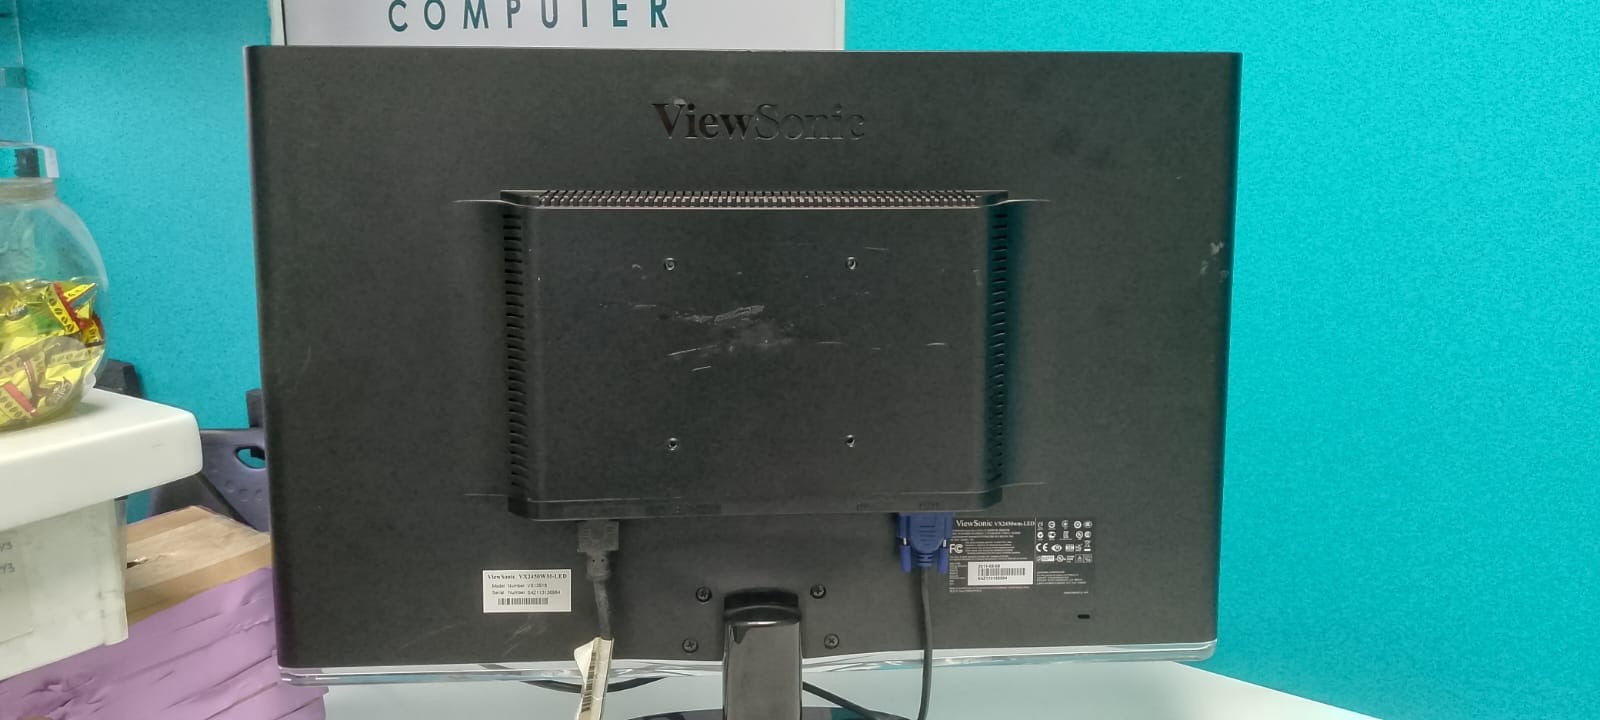 computadoras y laptops - Monitor Viewsonic VX2450mn-LED 23.6 Pulgada / VGA/ Brillo /Nitidez               5